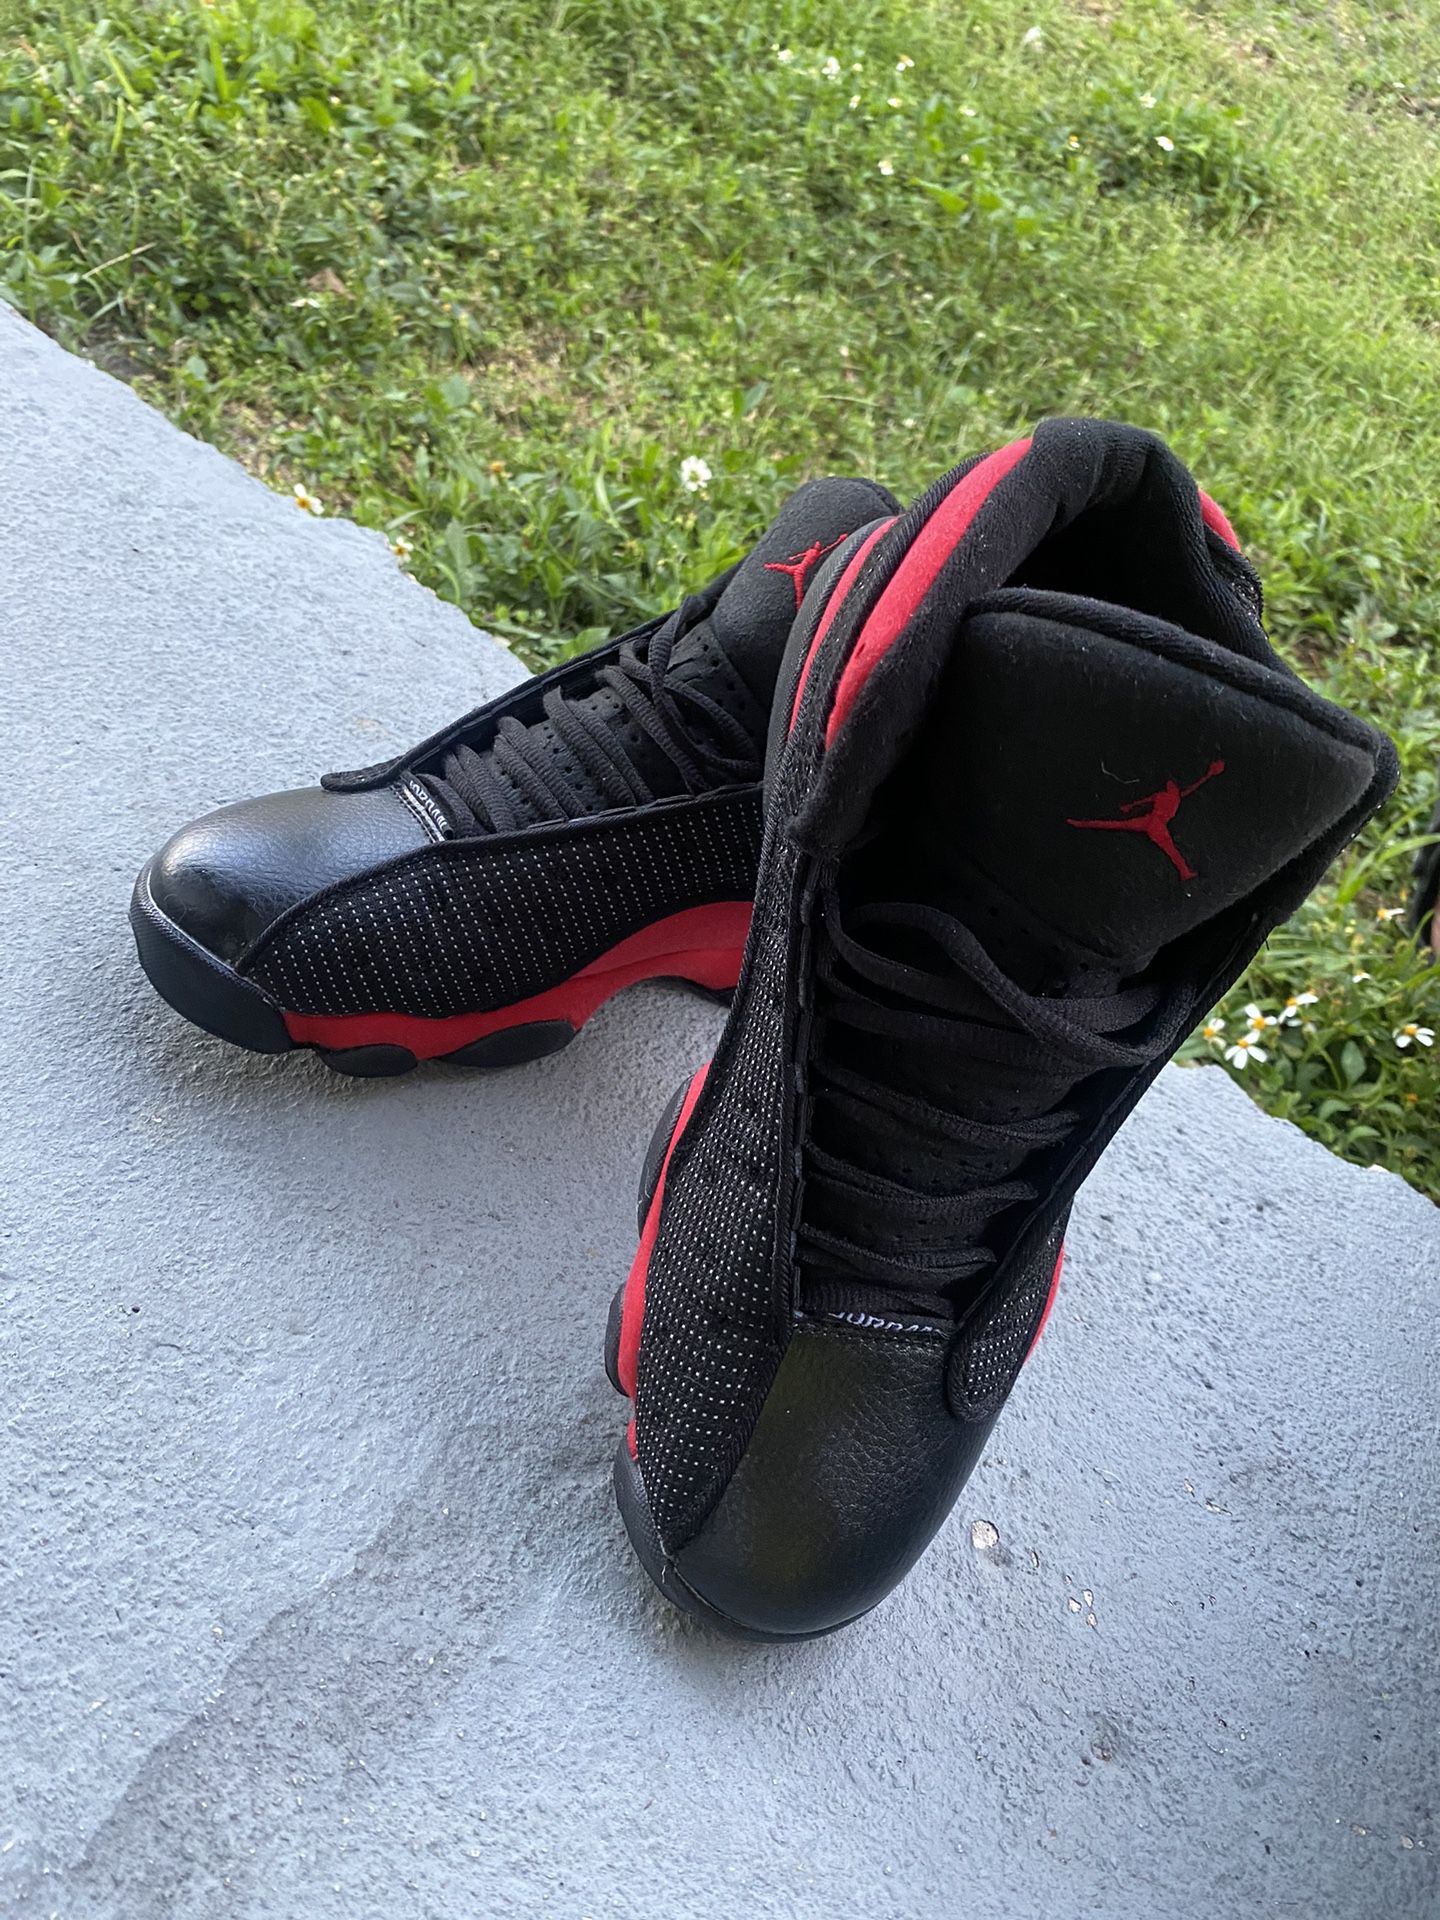 Jordan Retros 13 Red N Black 